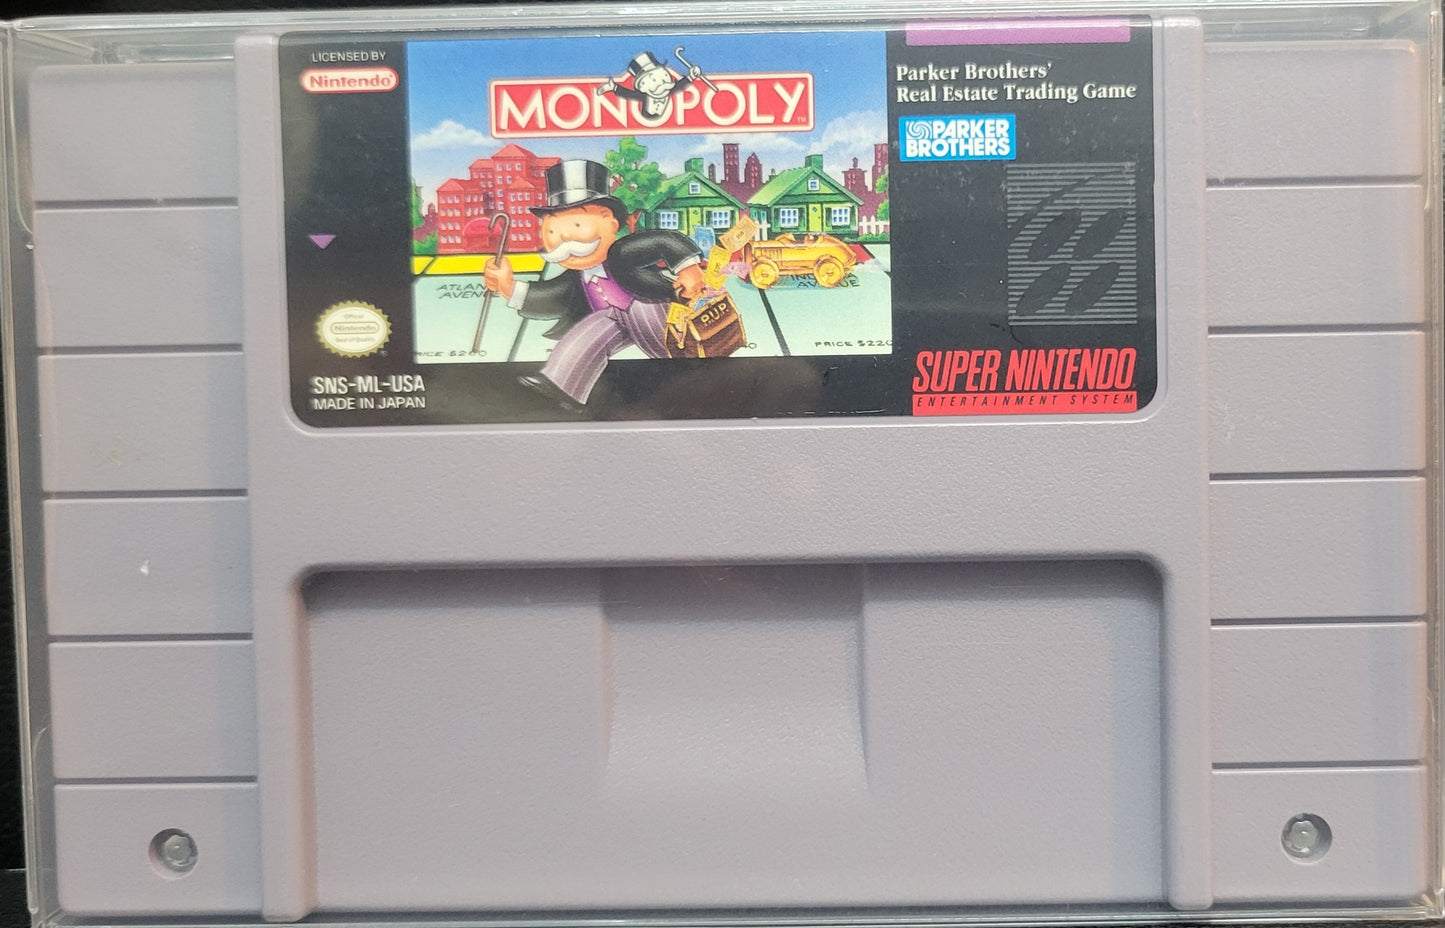 Monopoly 1992 SNES Authentic Cartridge (Super Nintendo Entertainment System) Classic Arcade Game Original Condition + Protector